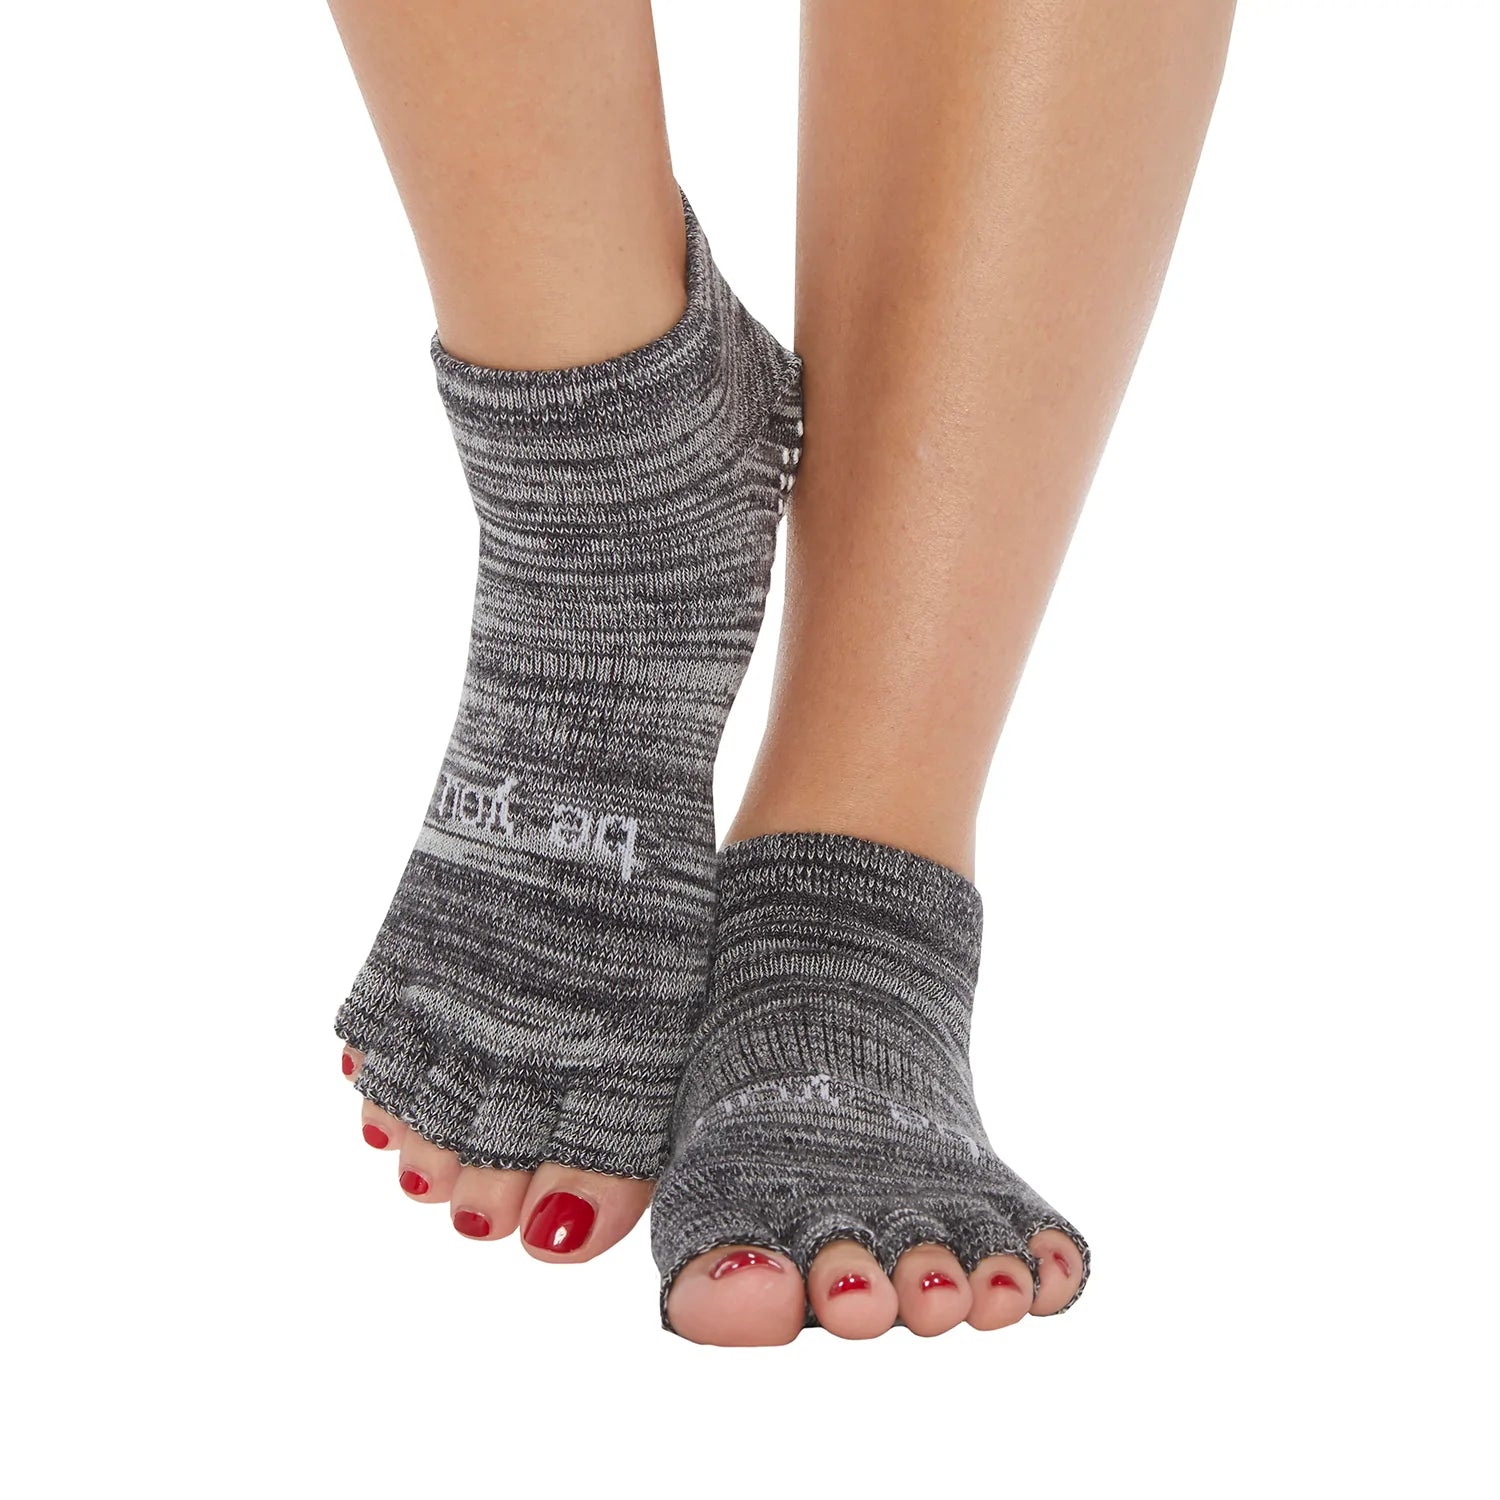 Sticky Be Socks - Be Patient  Grip socks, Socks, Toe socks